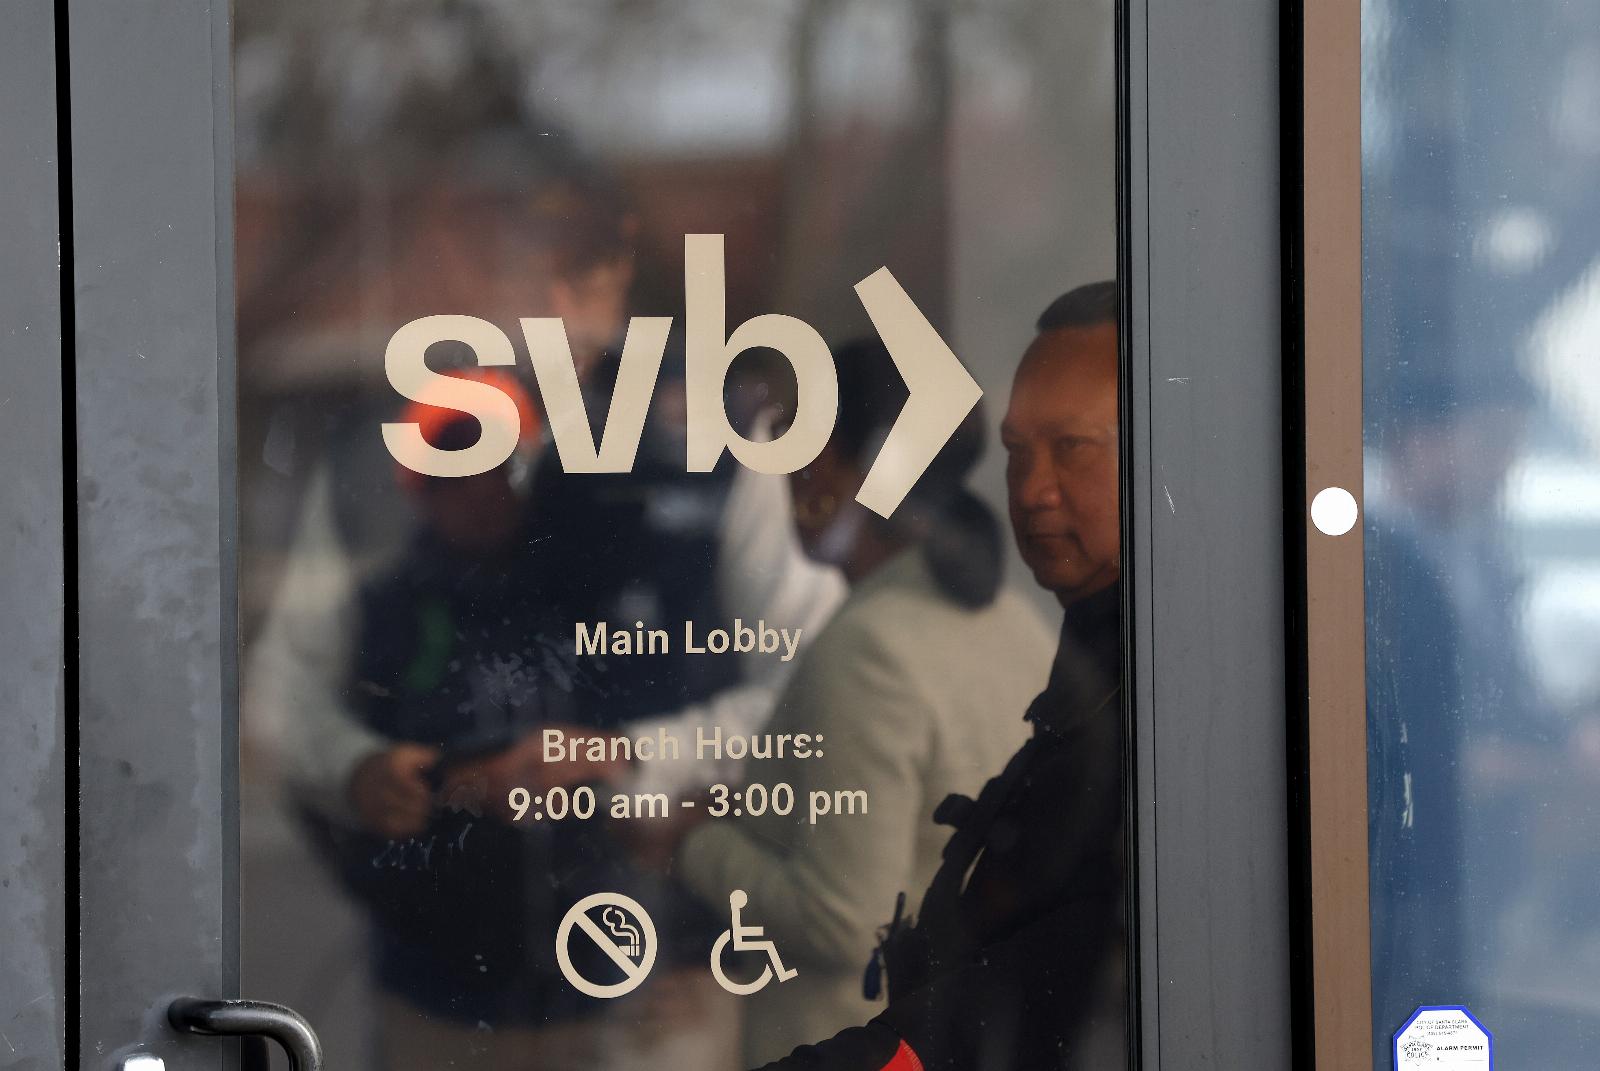 Some international regulators froze assets of local SVB branches